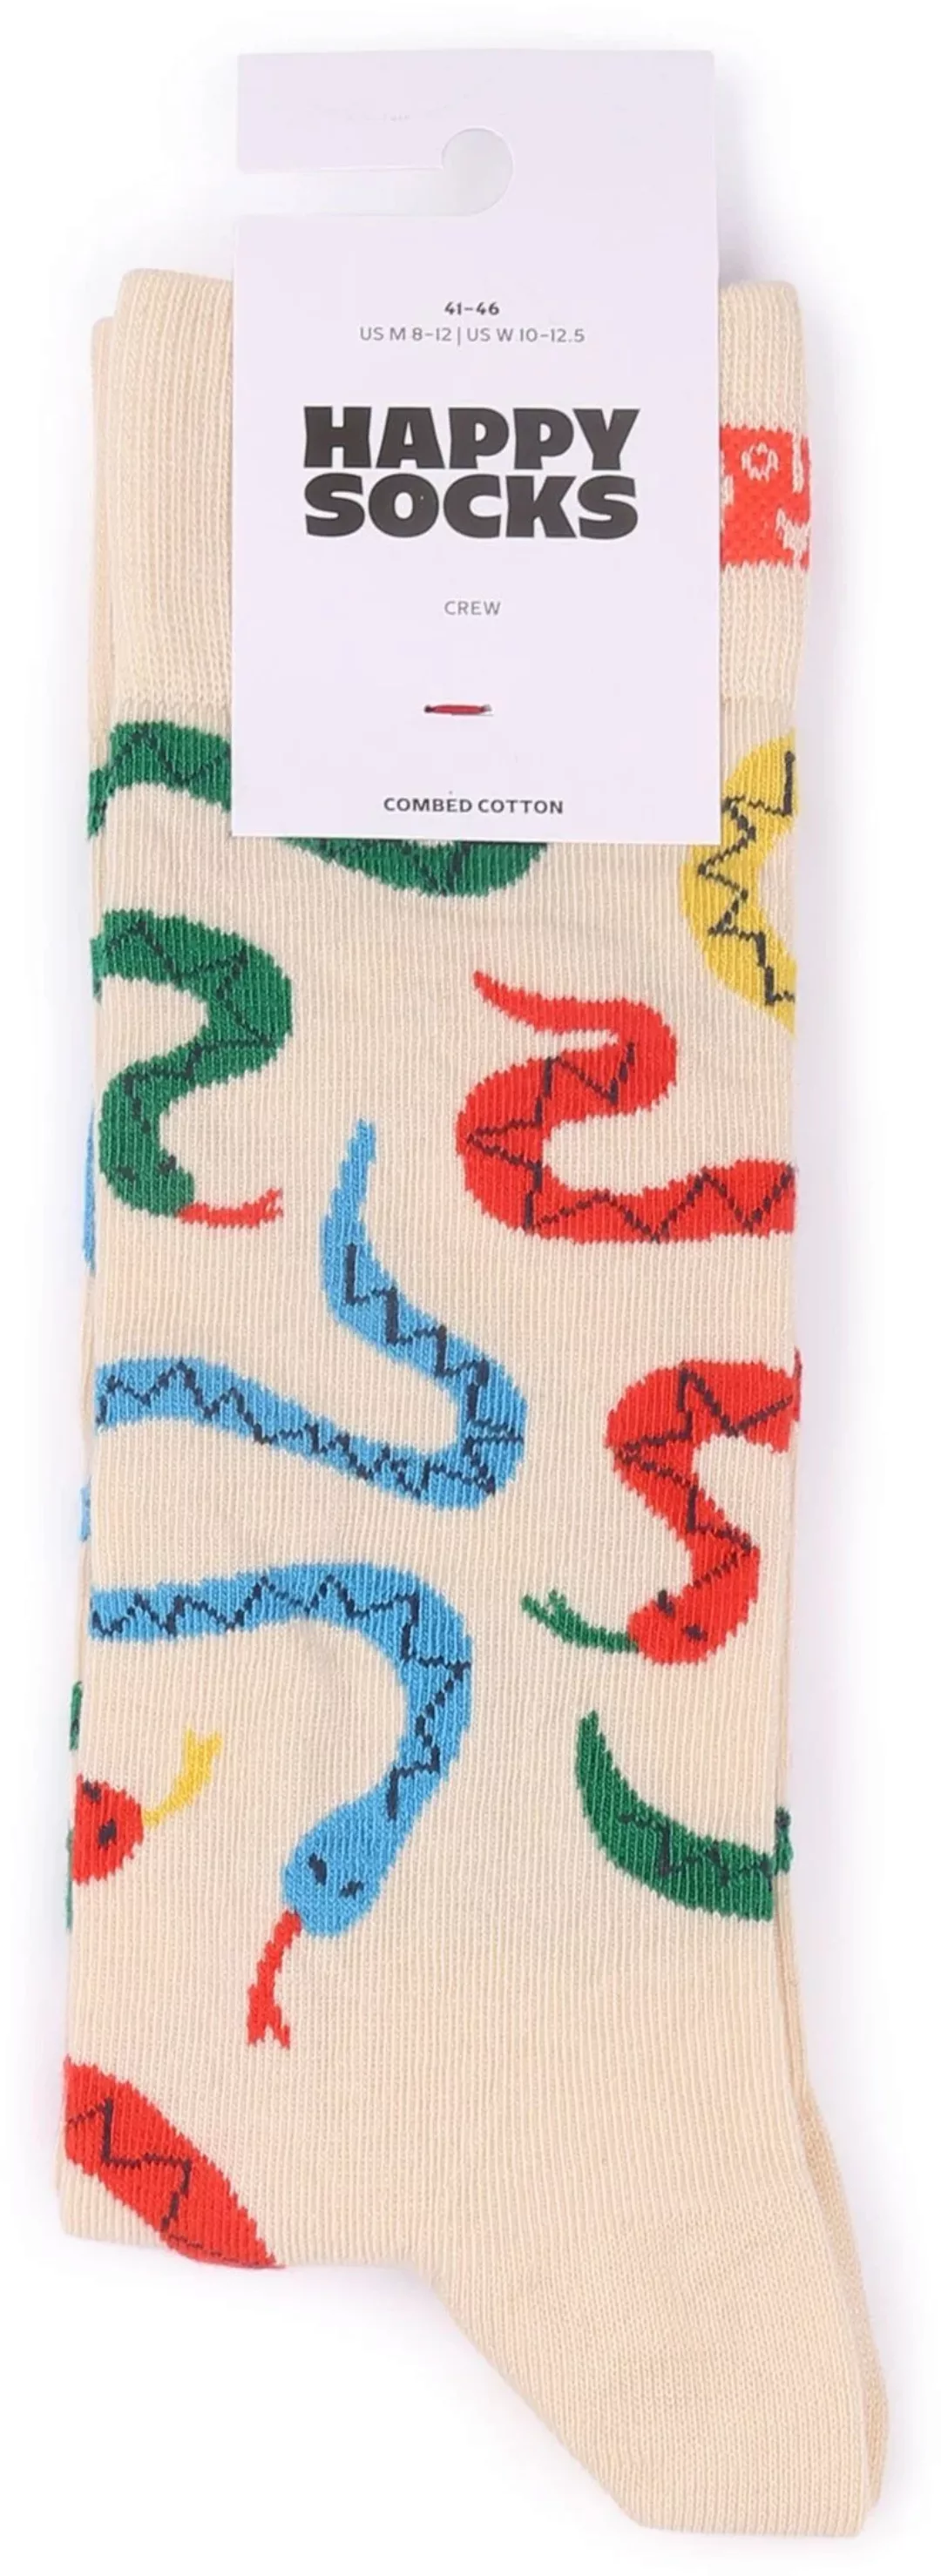 Happy Socks Socken Snakes - Größe 41-46 günstig online kaufen